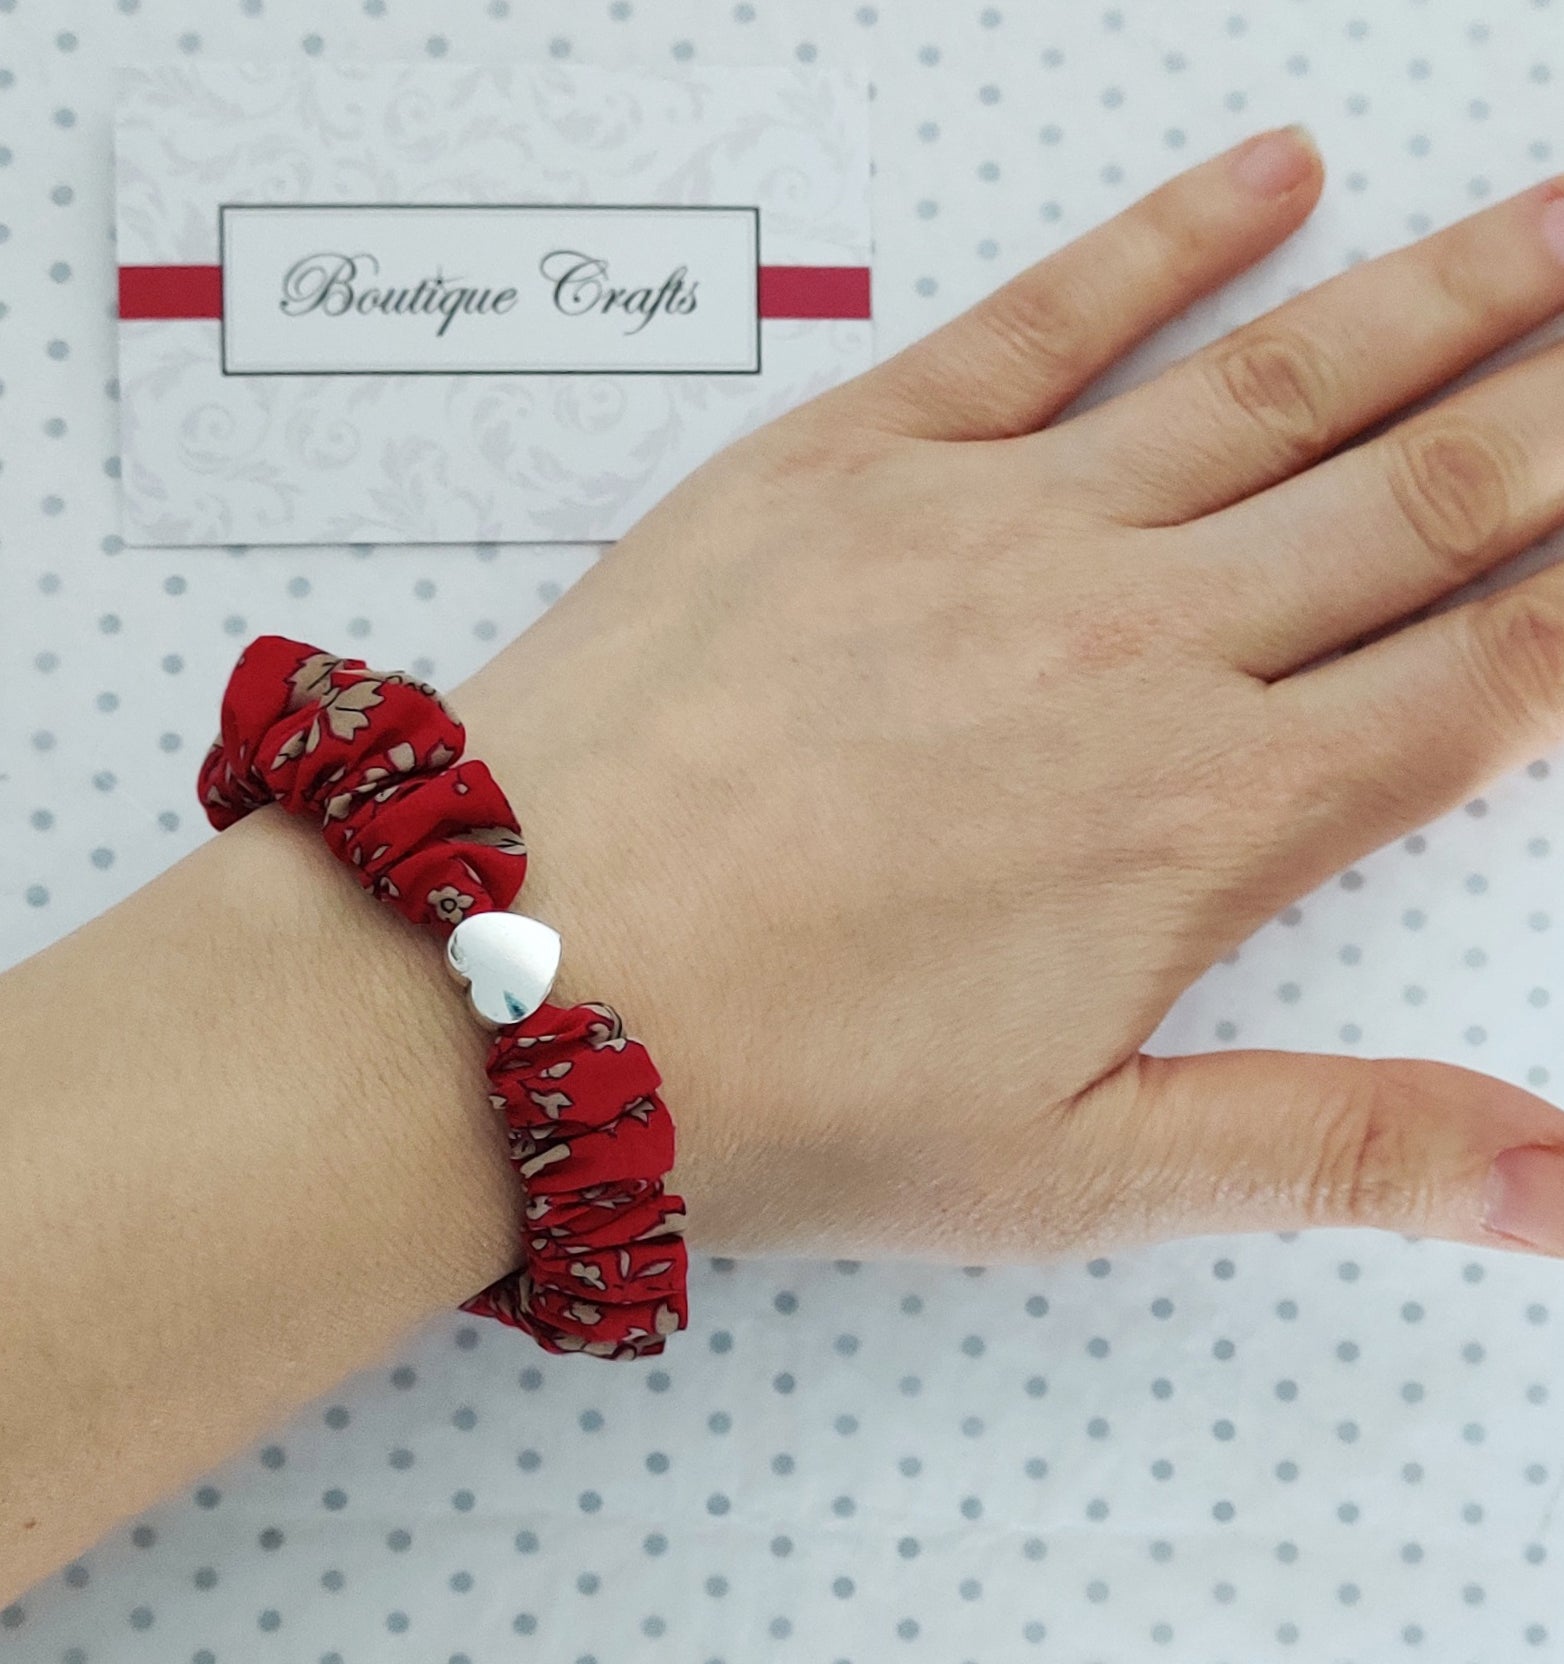 💖 How to Make Fabric Scrunchie Button Charm Flower Bracelet / Hair Tie |  pulseira / laço de cabelo - YouTube